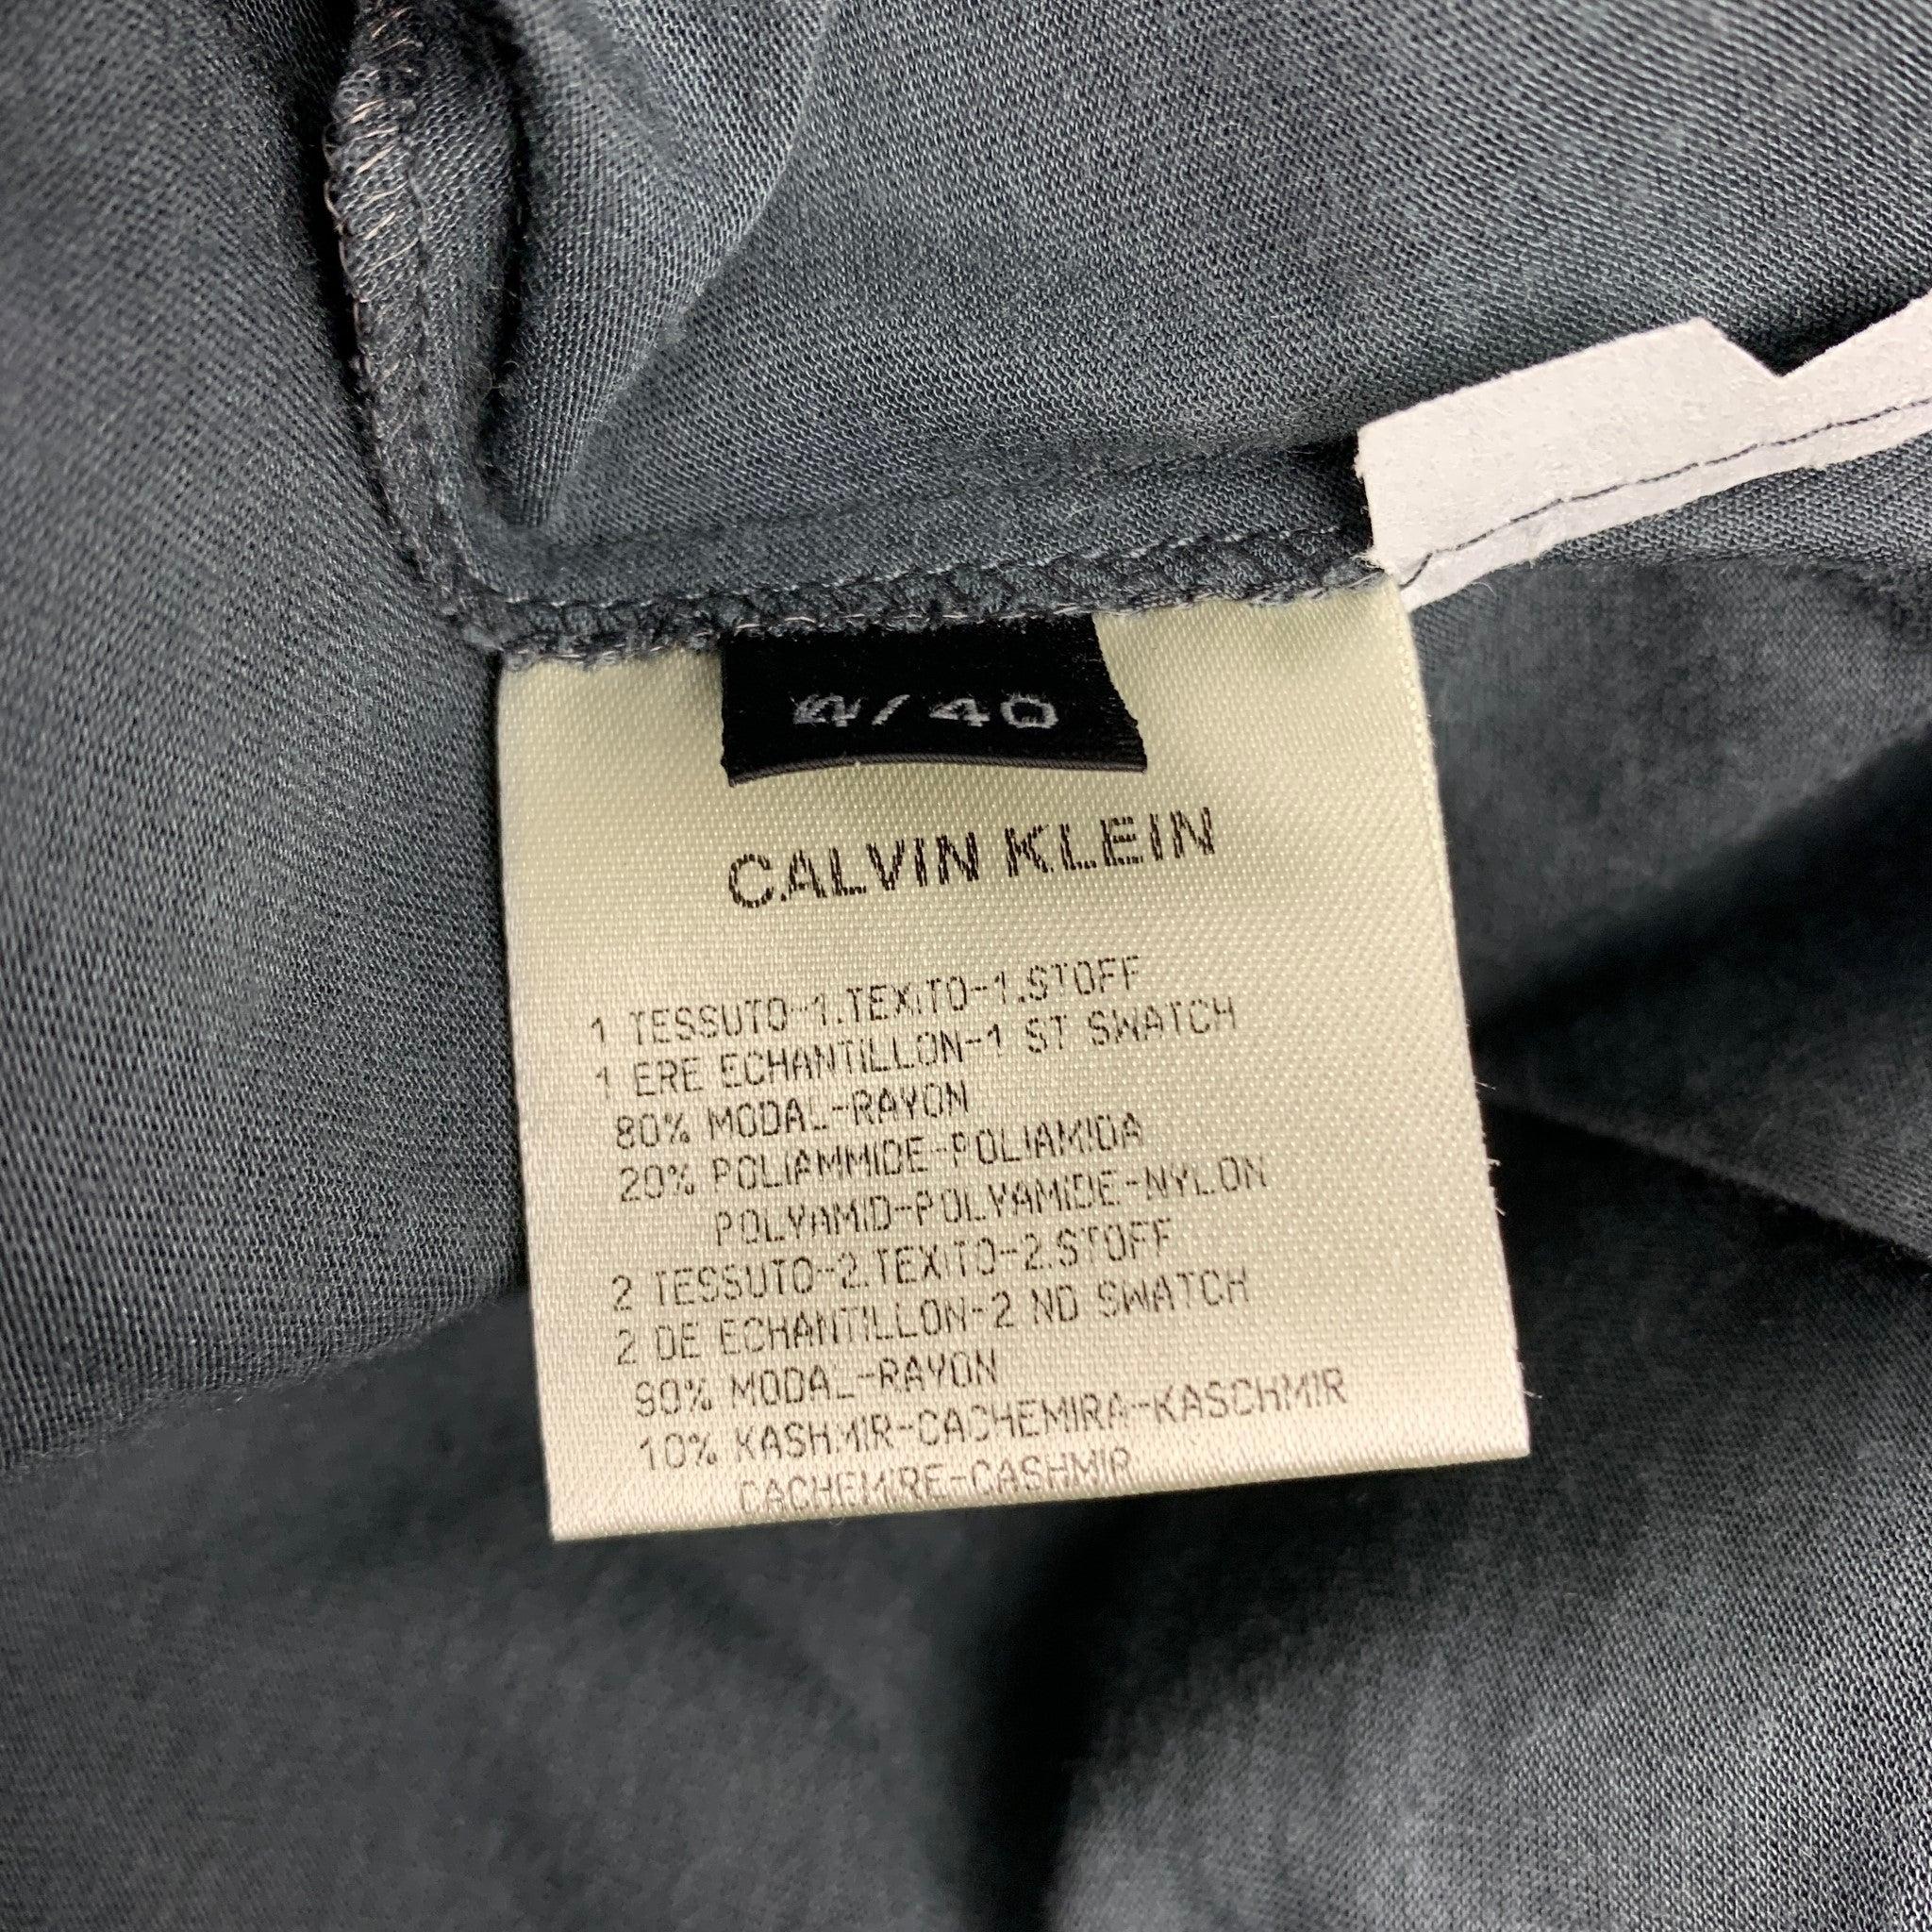 CALVIN KLEIN COLLECTION Size 4 Grey Lace Modal Blend Sheath Dress 3